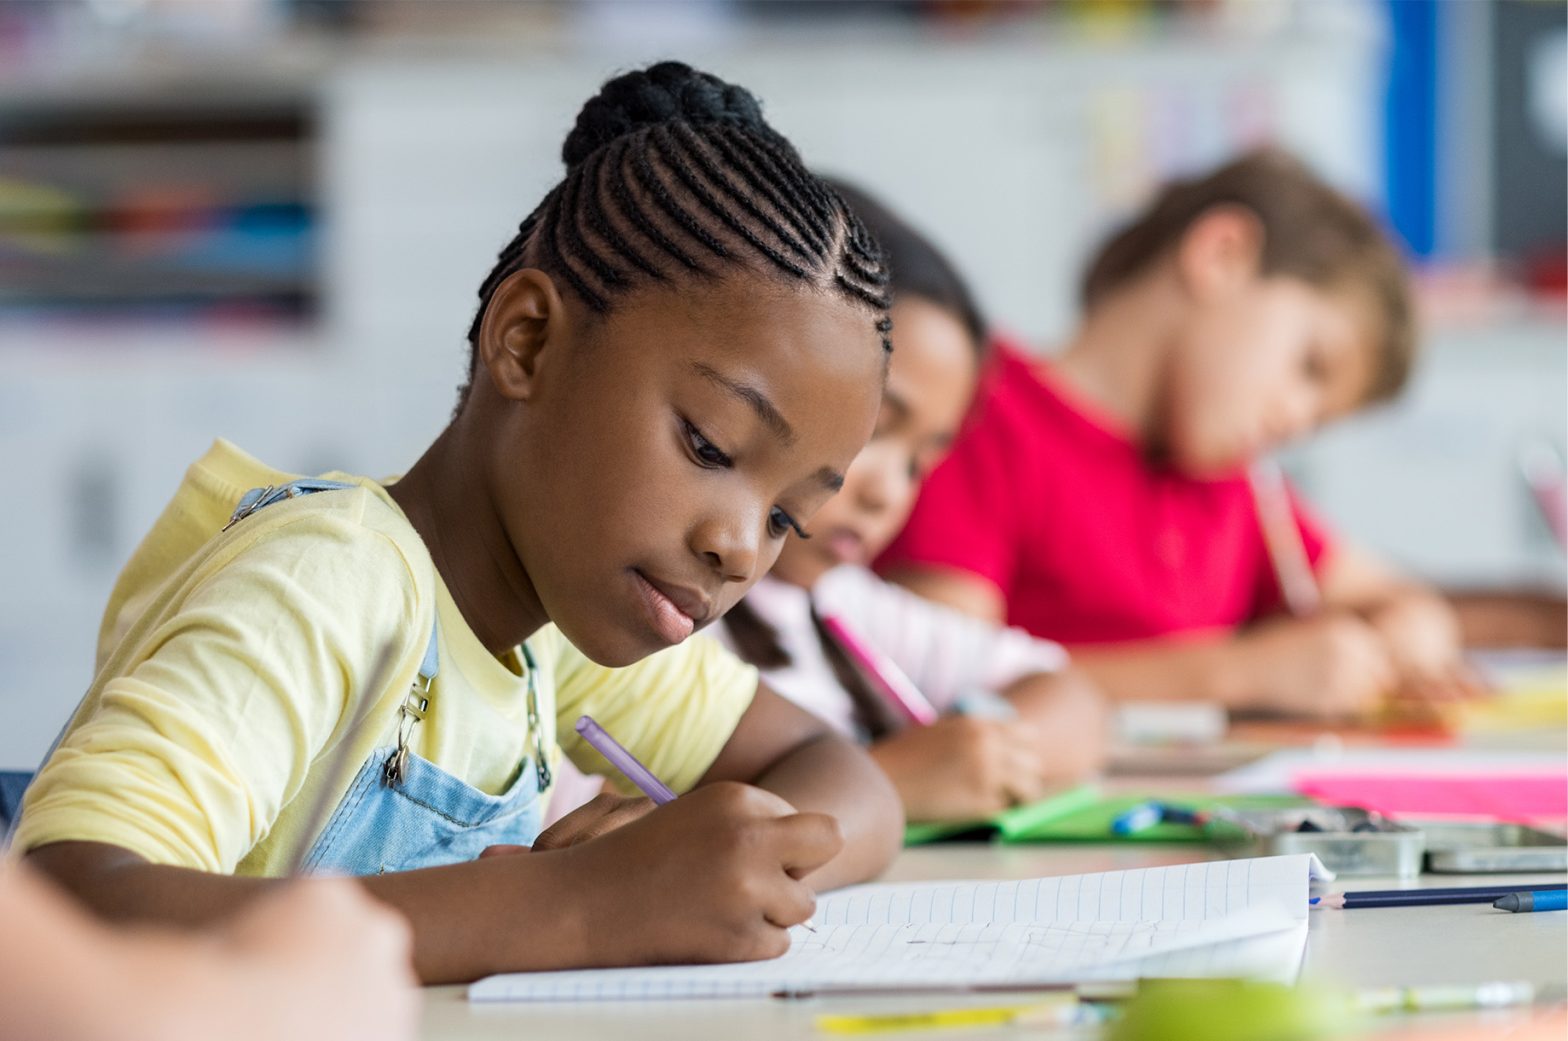 Elementary-aged kids in school writing